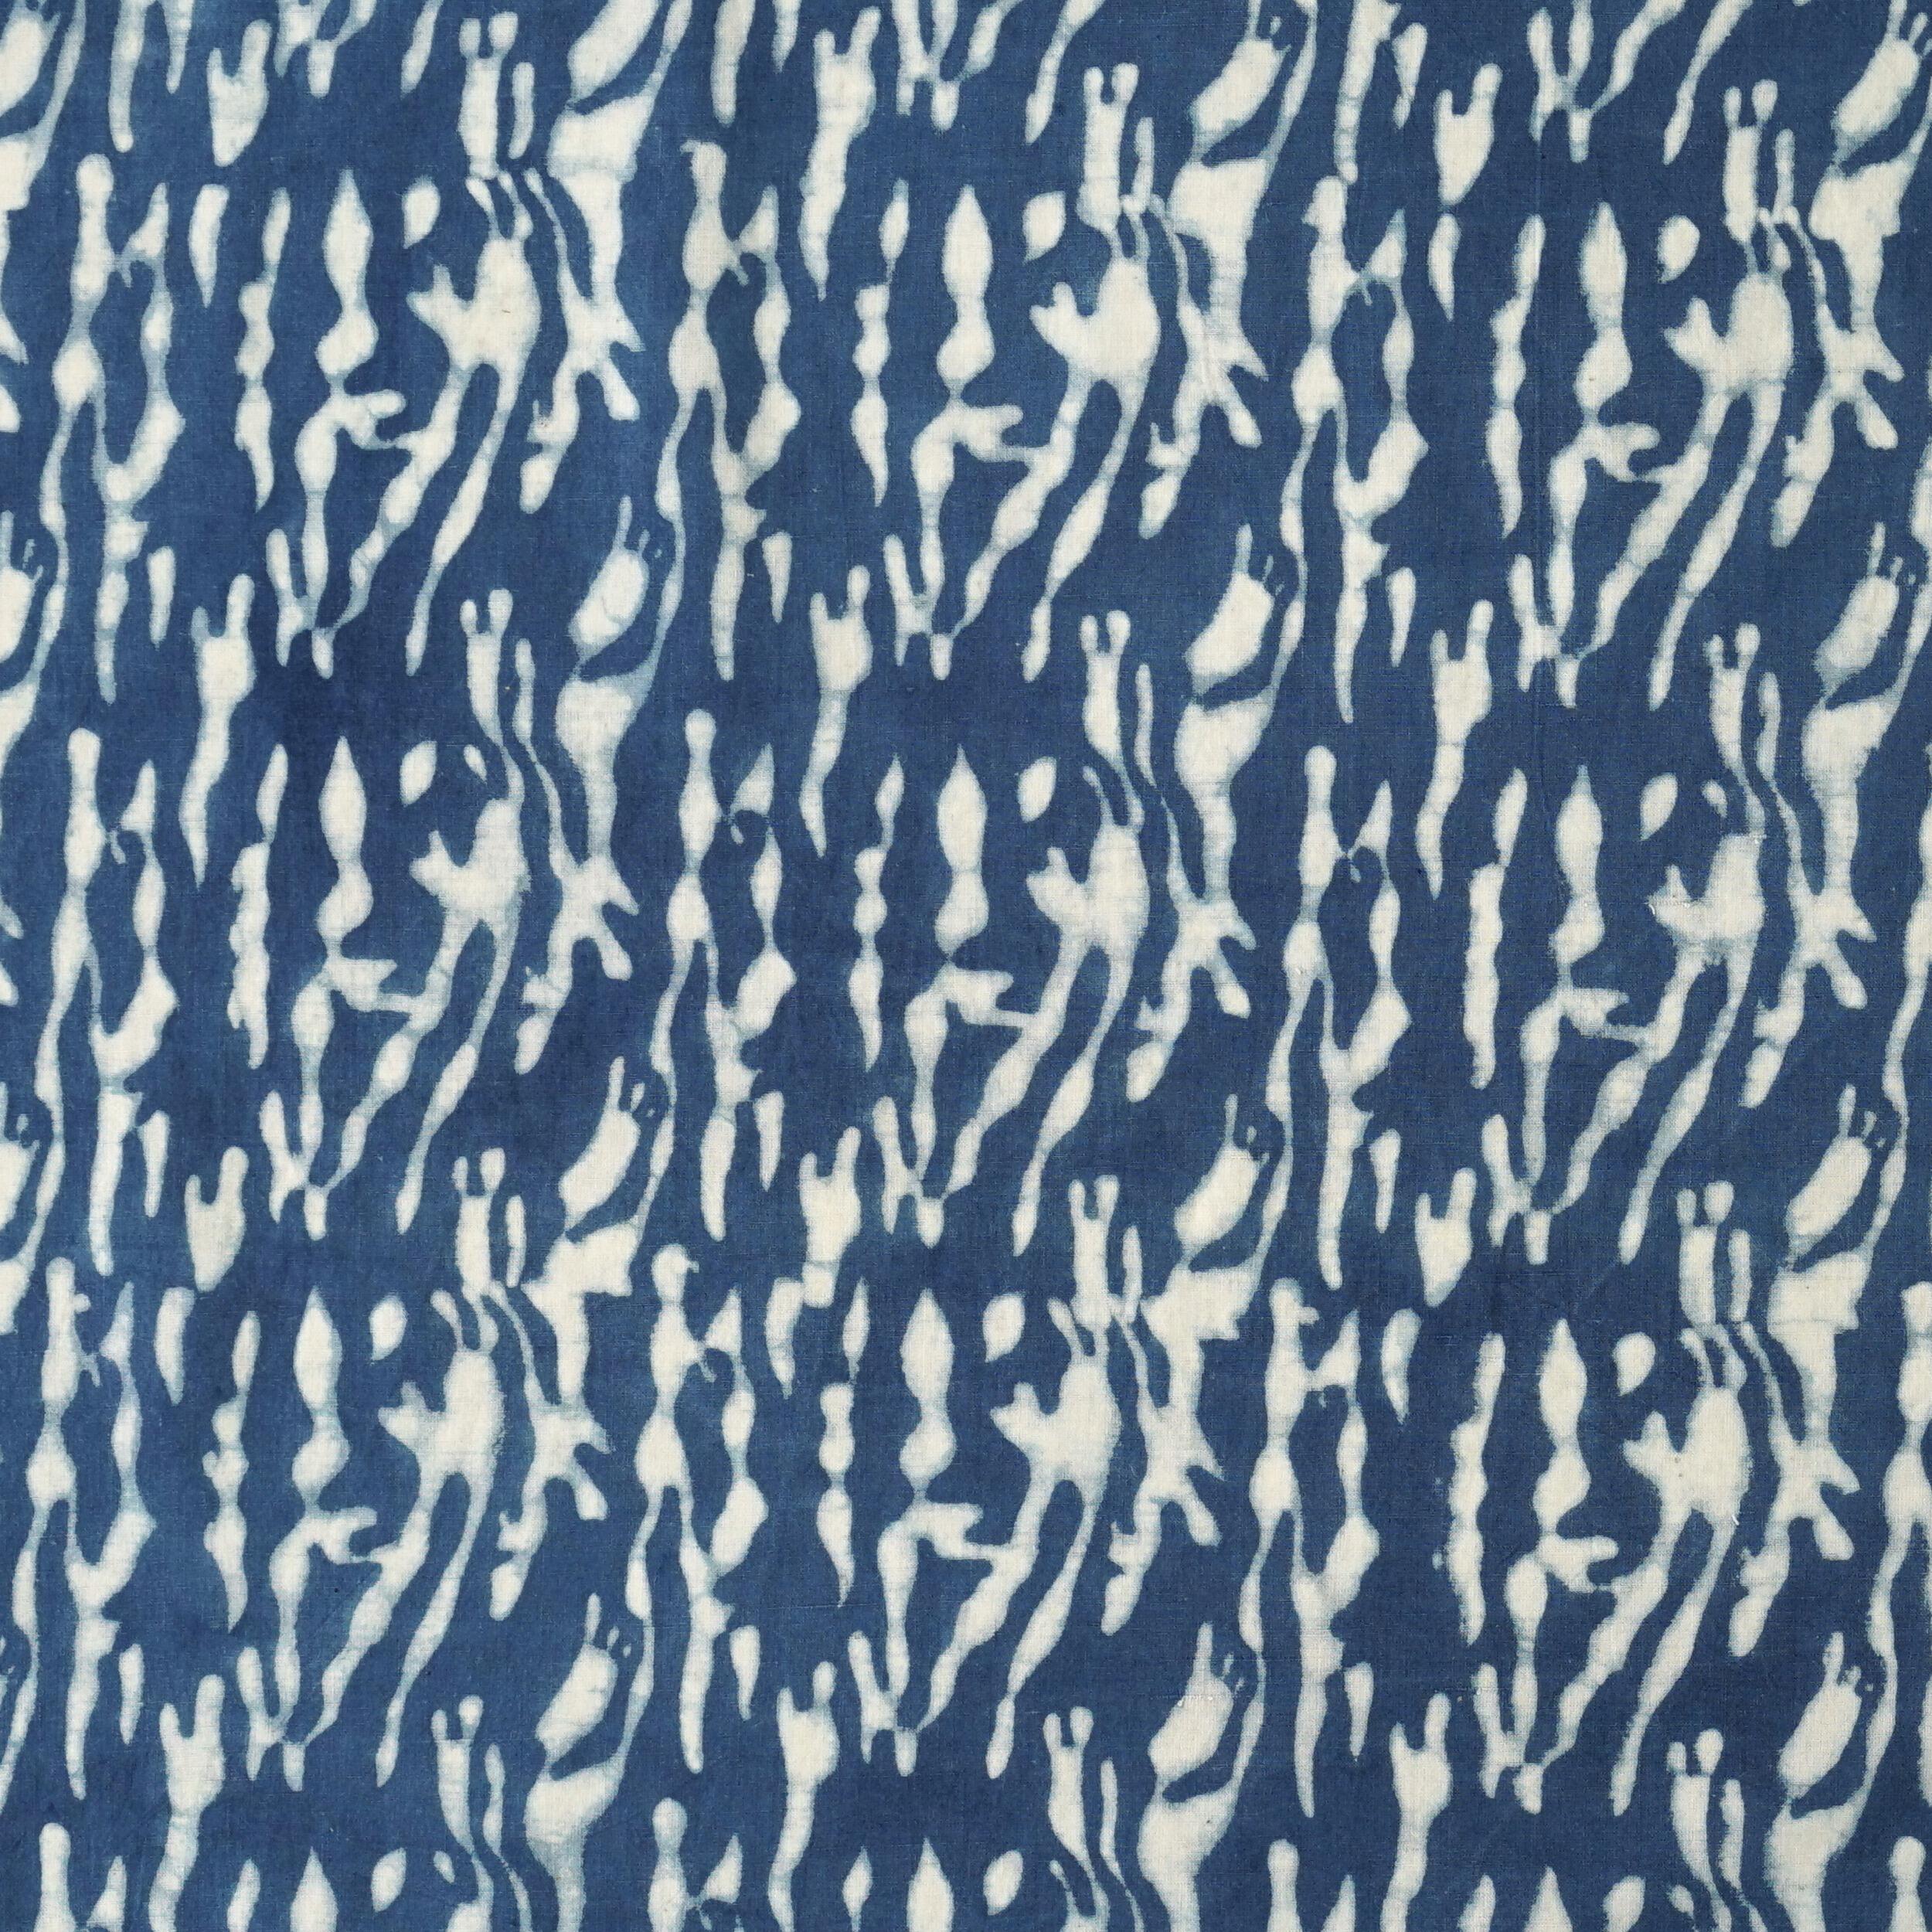 100% Block-Printed Cotton Fabric from India - Ajrak - Indigo White Tiger Print - Flat